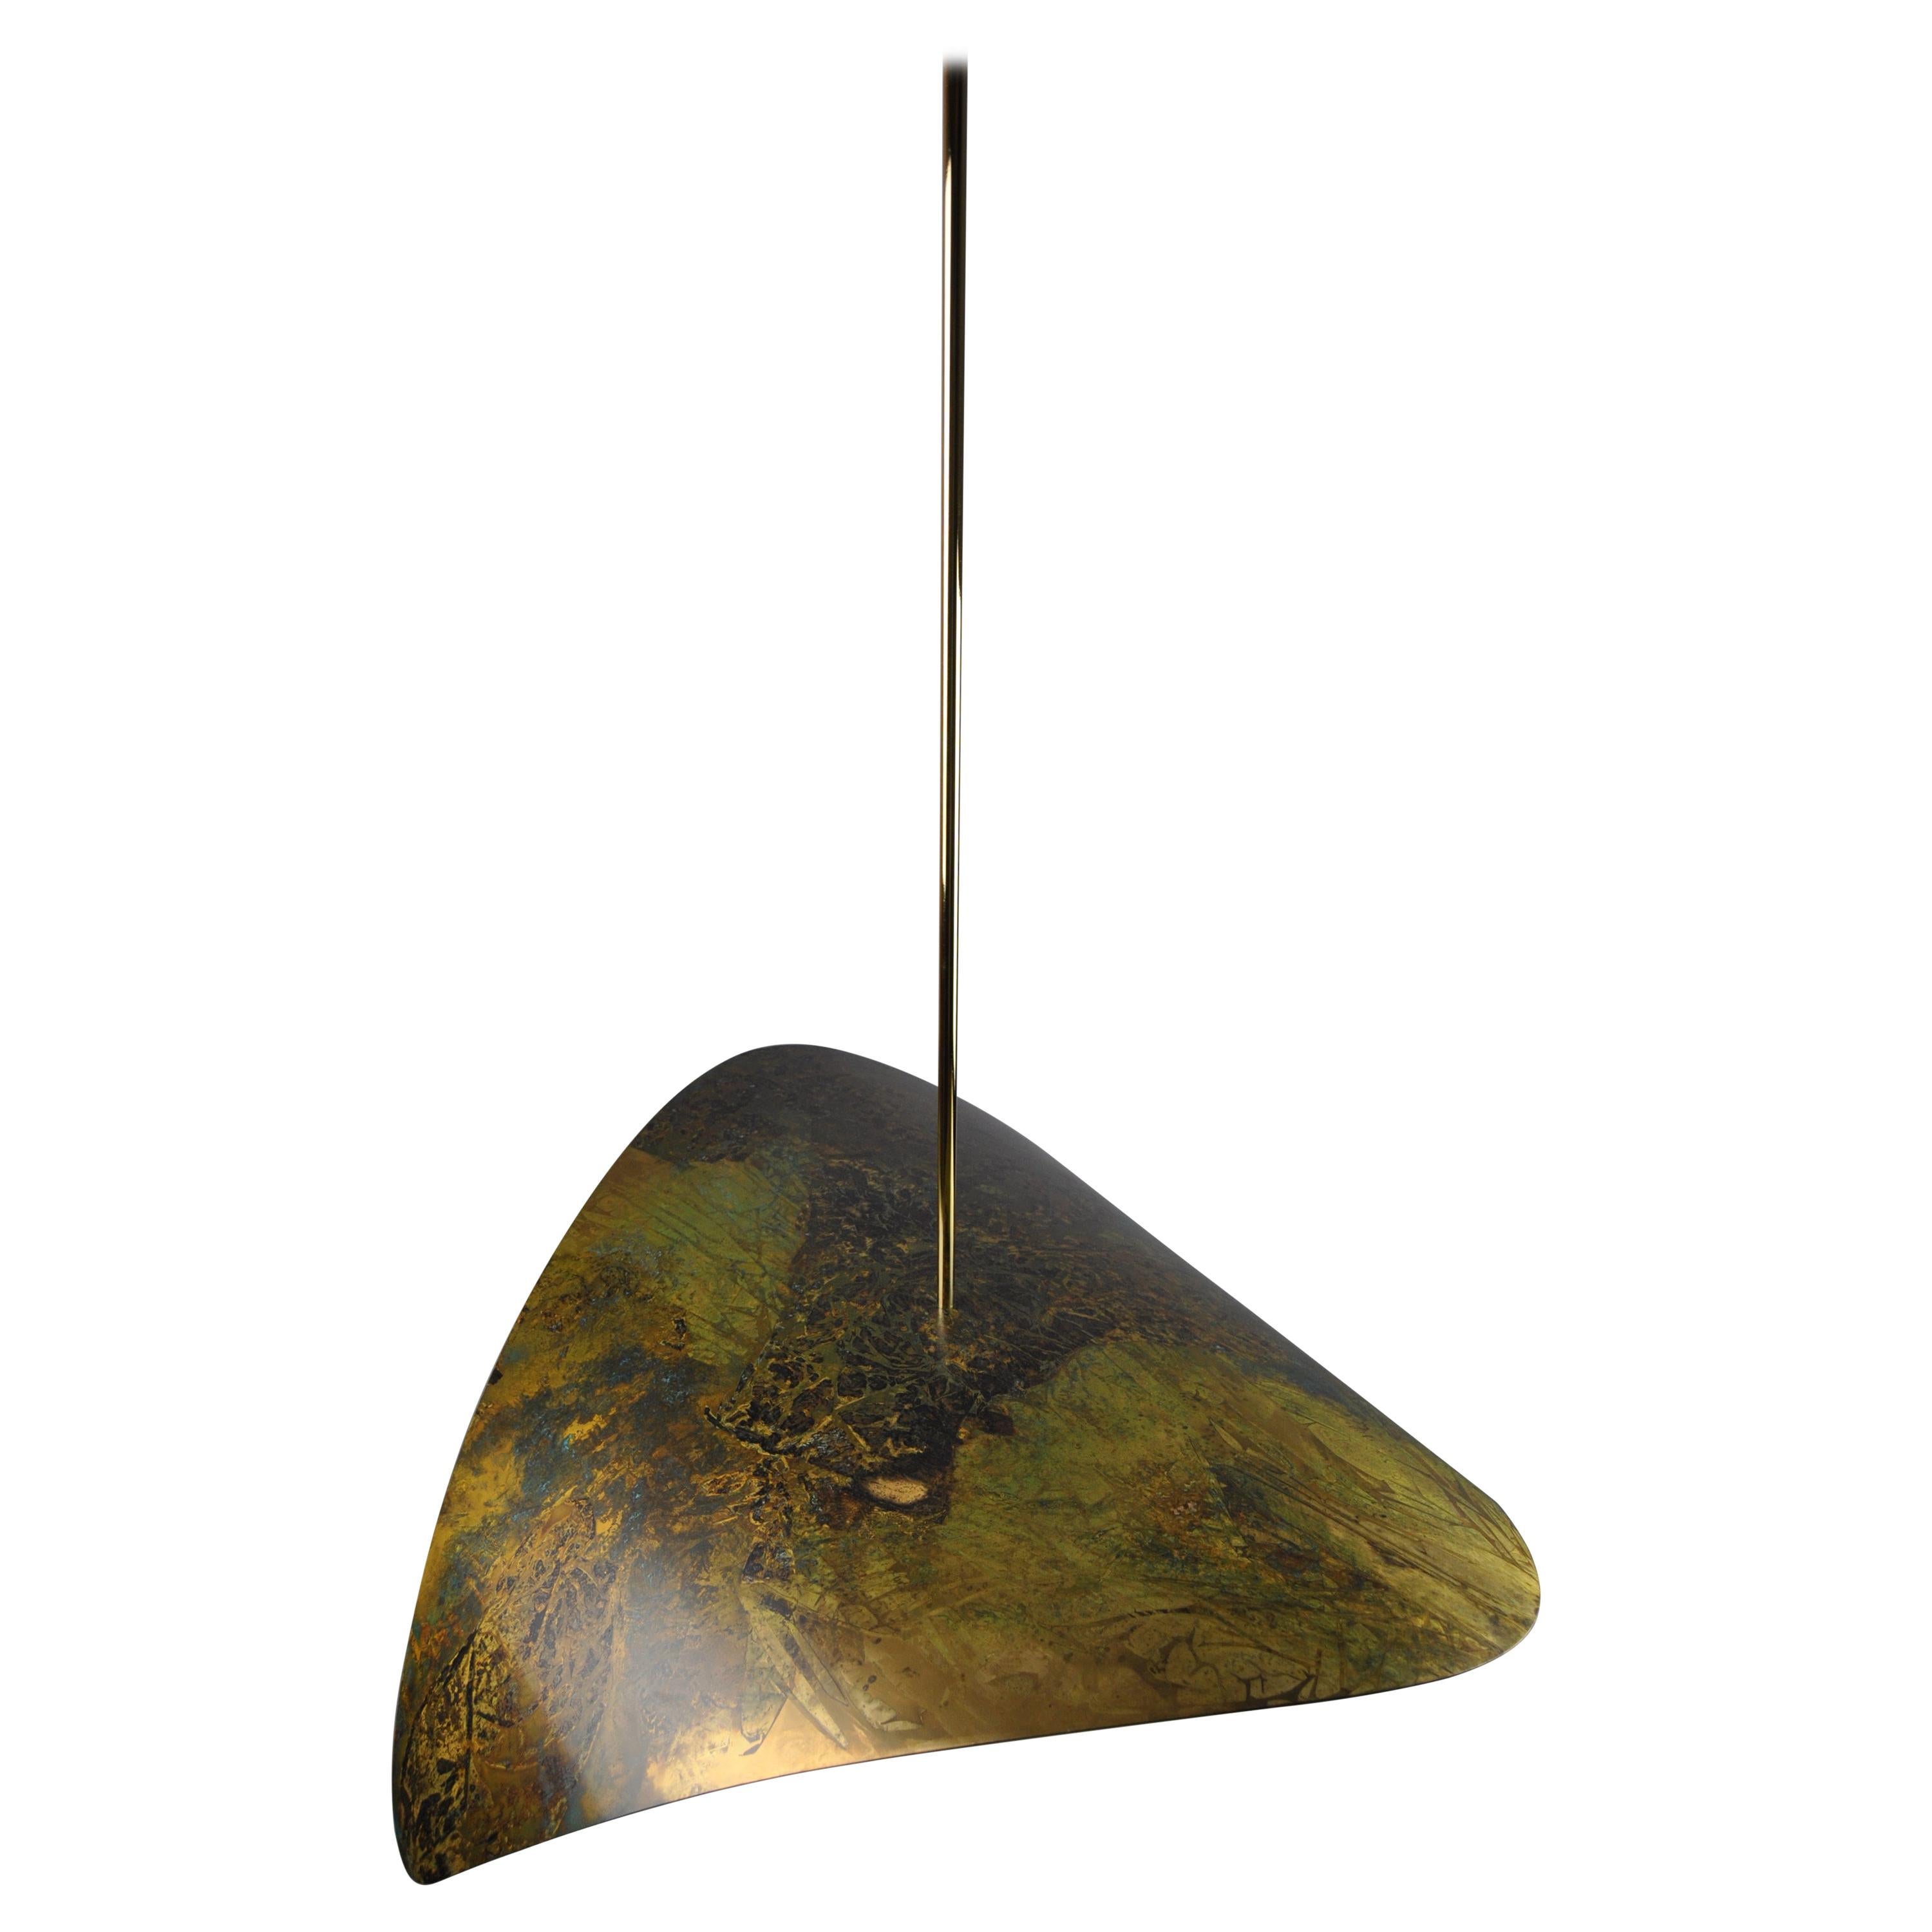 Tarnished Bronze Handmade Swedish Sculptural Pendant at 39”/ 95cm diameter For Sale 2